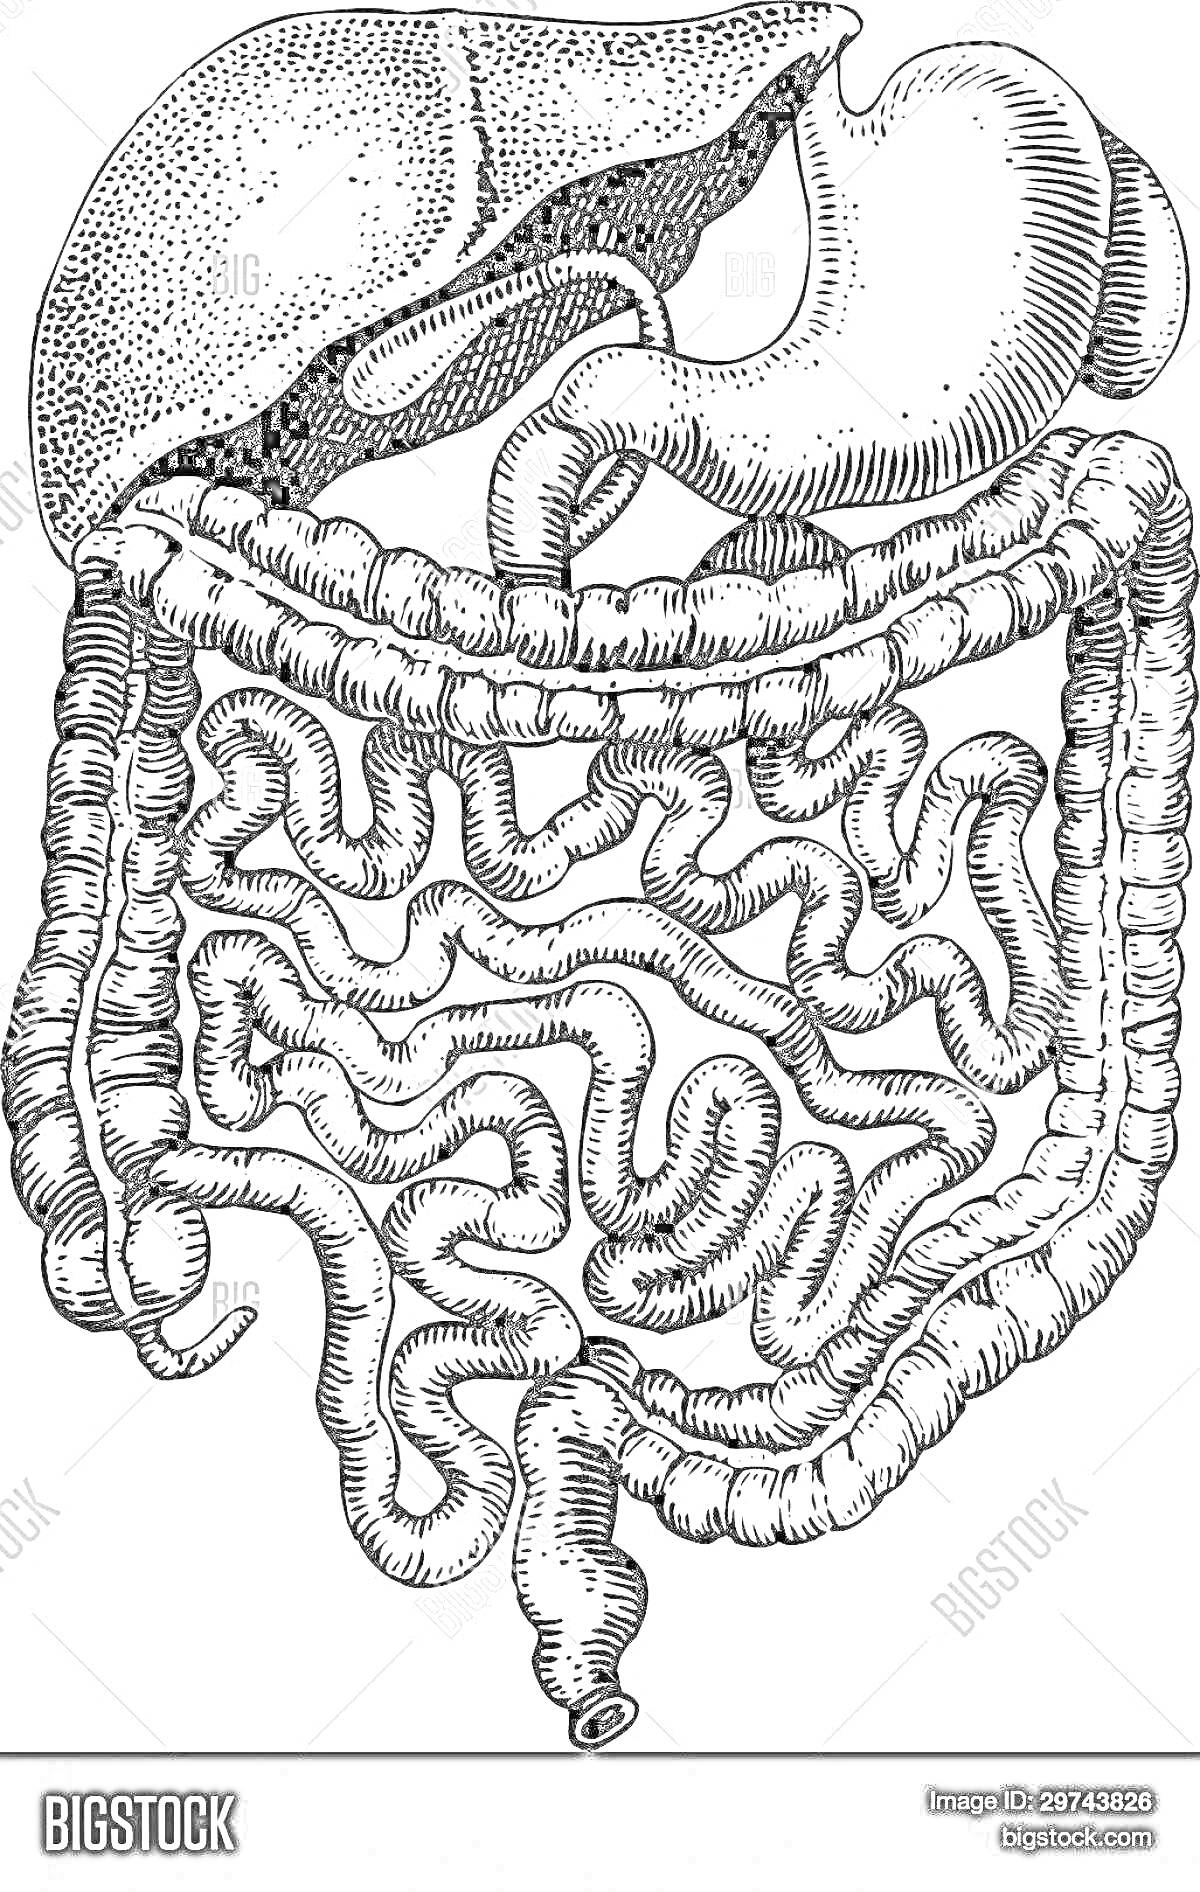 Раскраска кишечник человека, включающий желудок, тонкий кишечник, толстый кишечник, слепую кишку и аппендикс